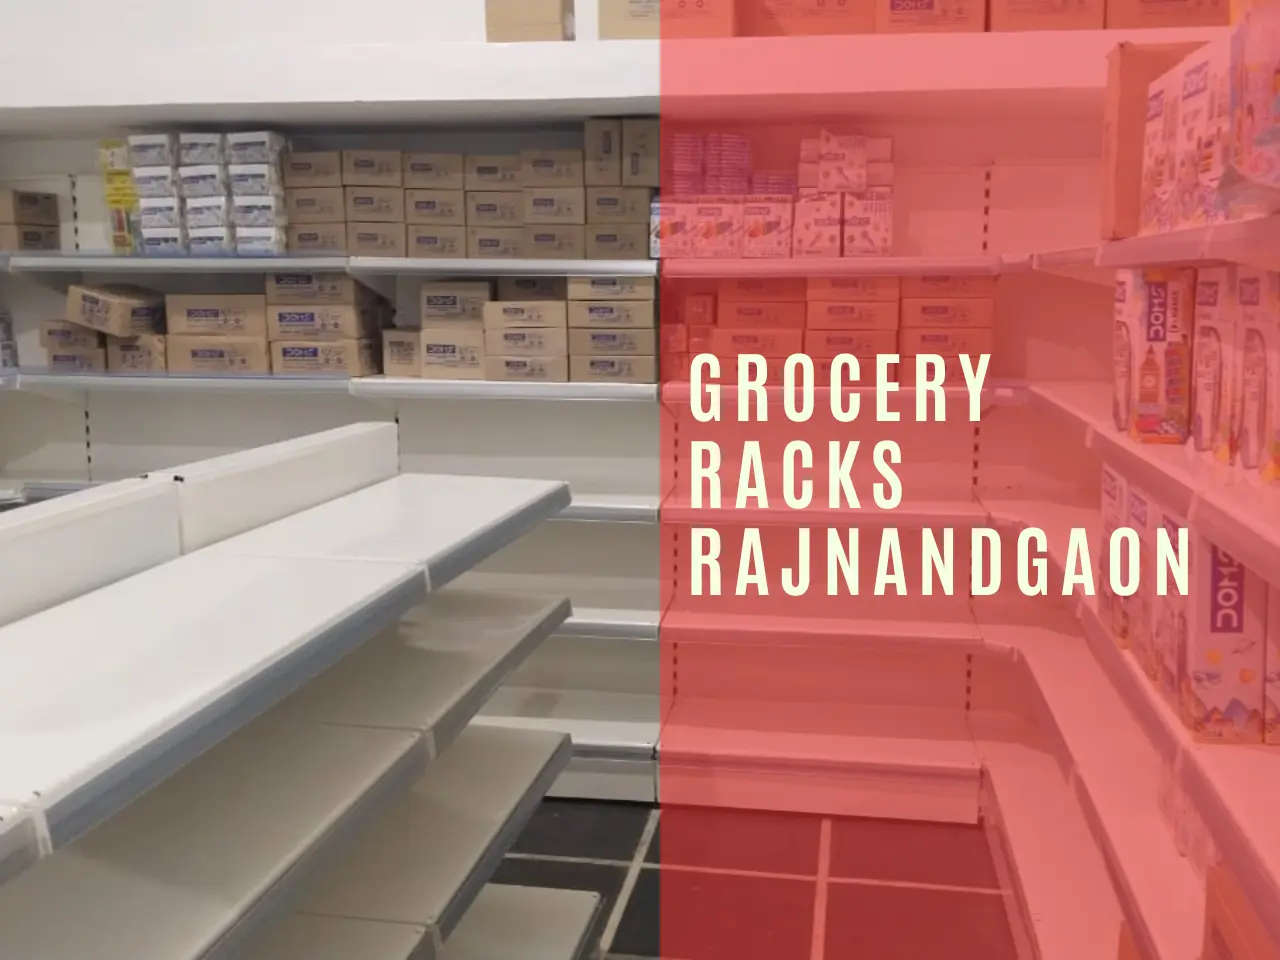 Grocery racks Rajnandgaon.webp